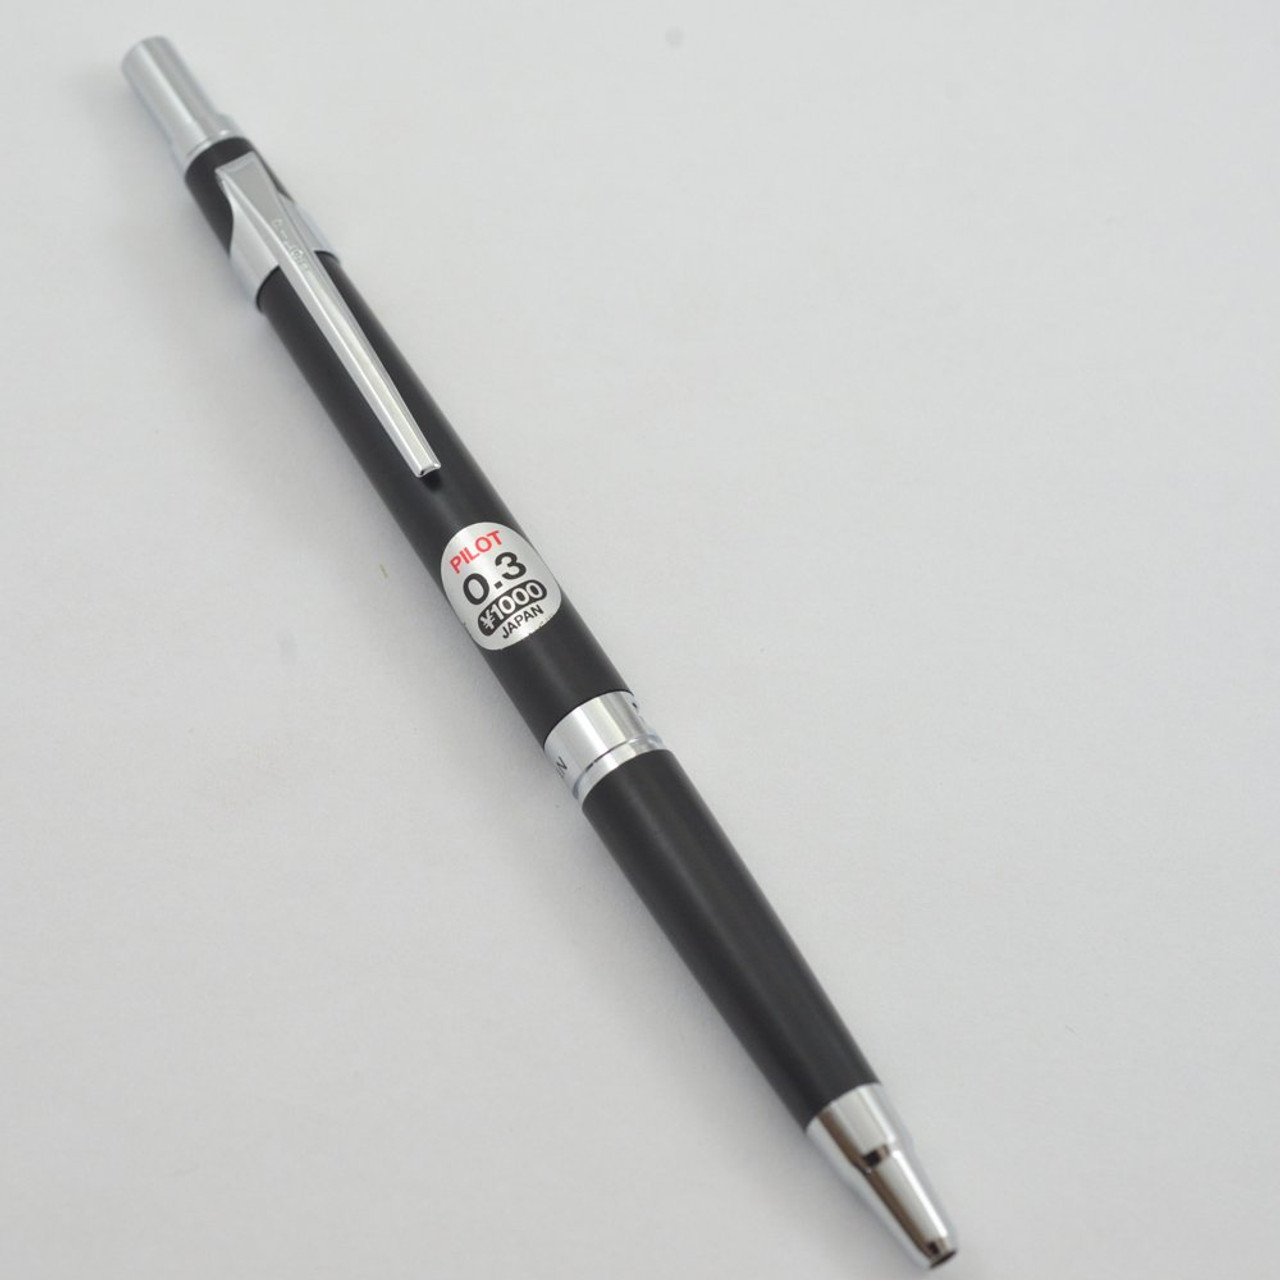 Pilot H-1003 Mechanical Pencil -  Black, Retractable Tip, 0.3mm Lead (Mint, Works Well)